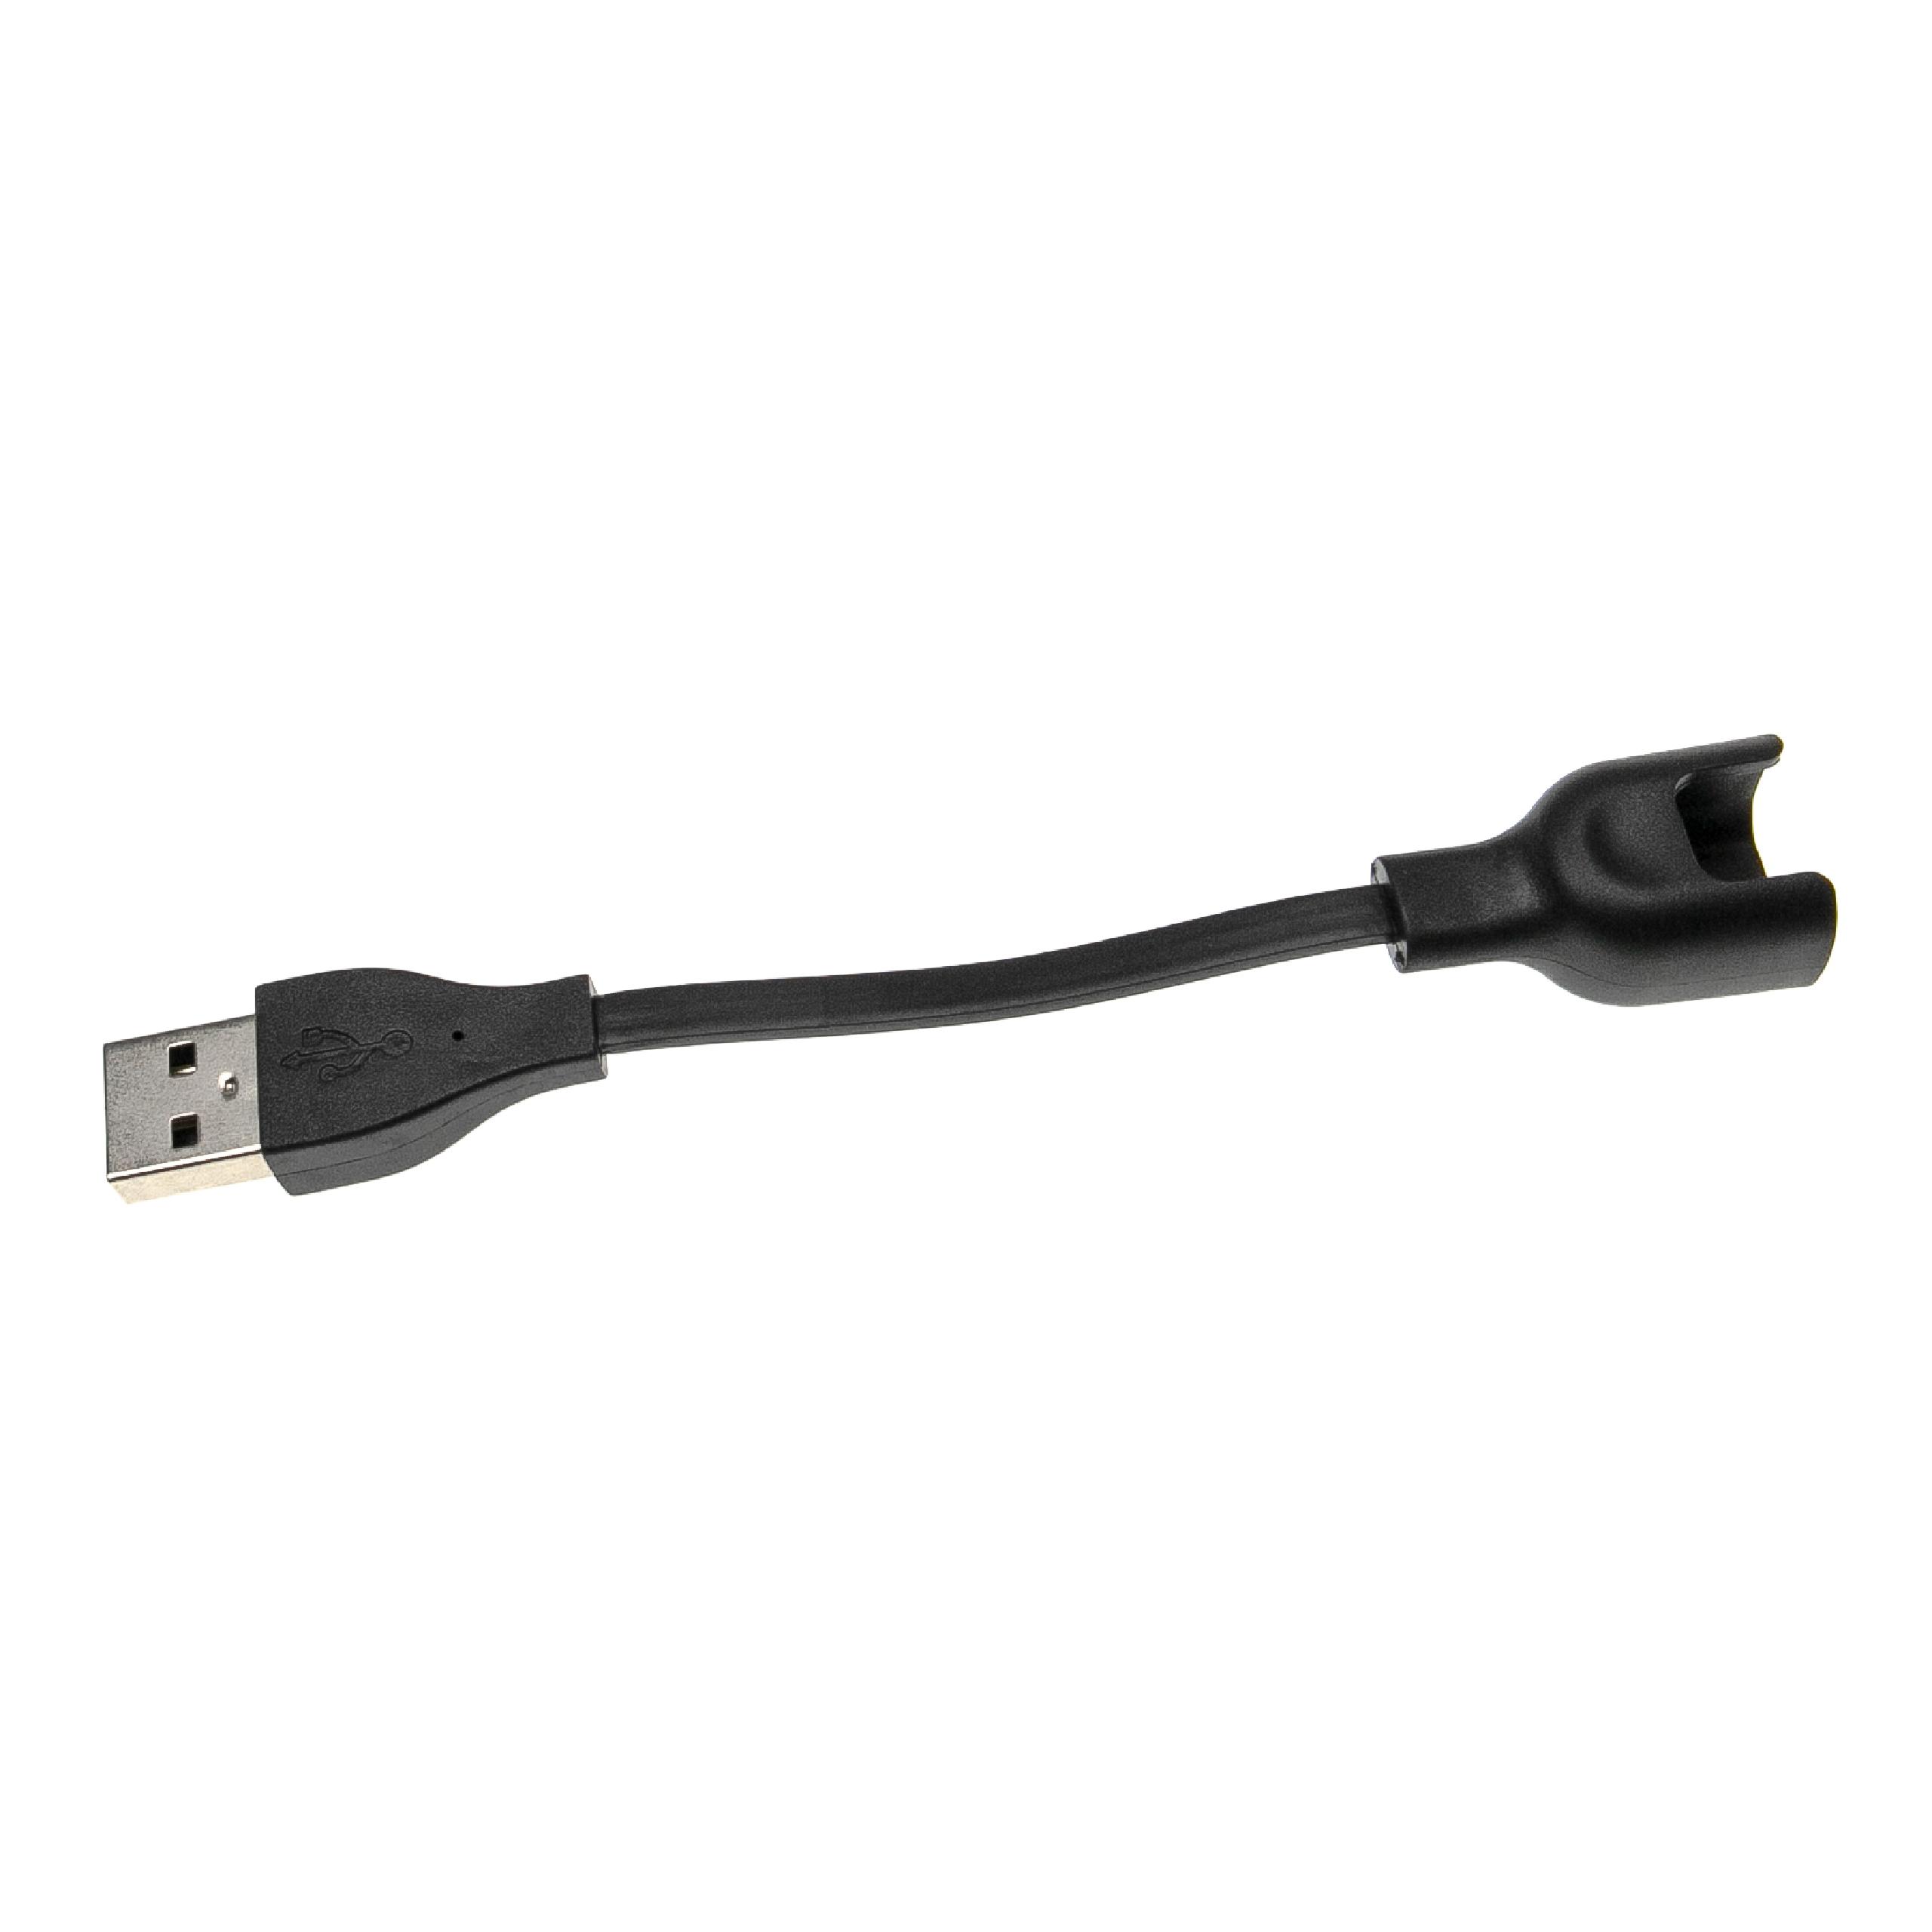 Cable de carga USB para smartwatch Huawei Honor - negro 12,5 cm